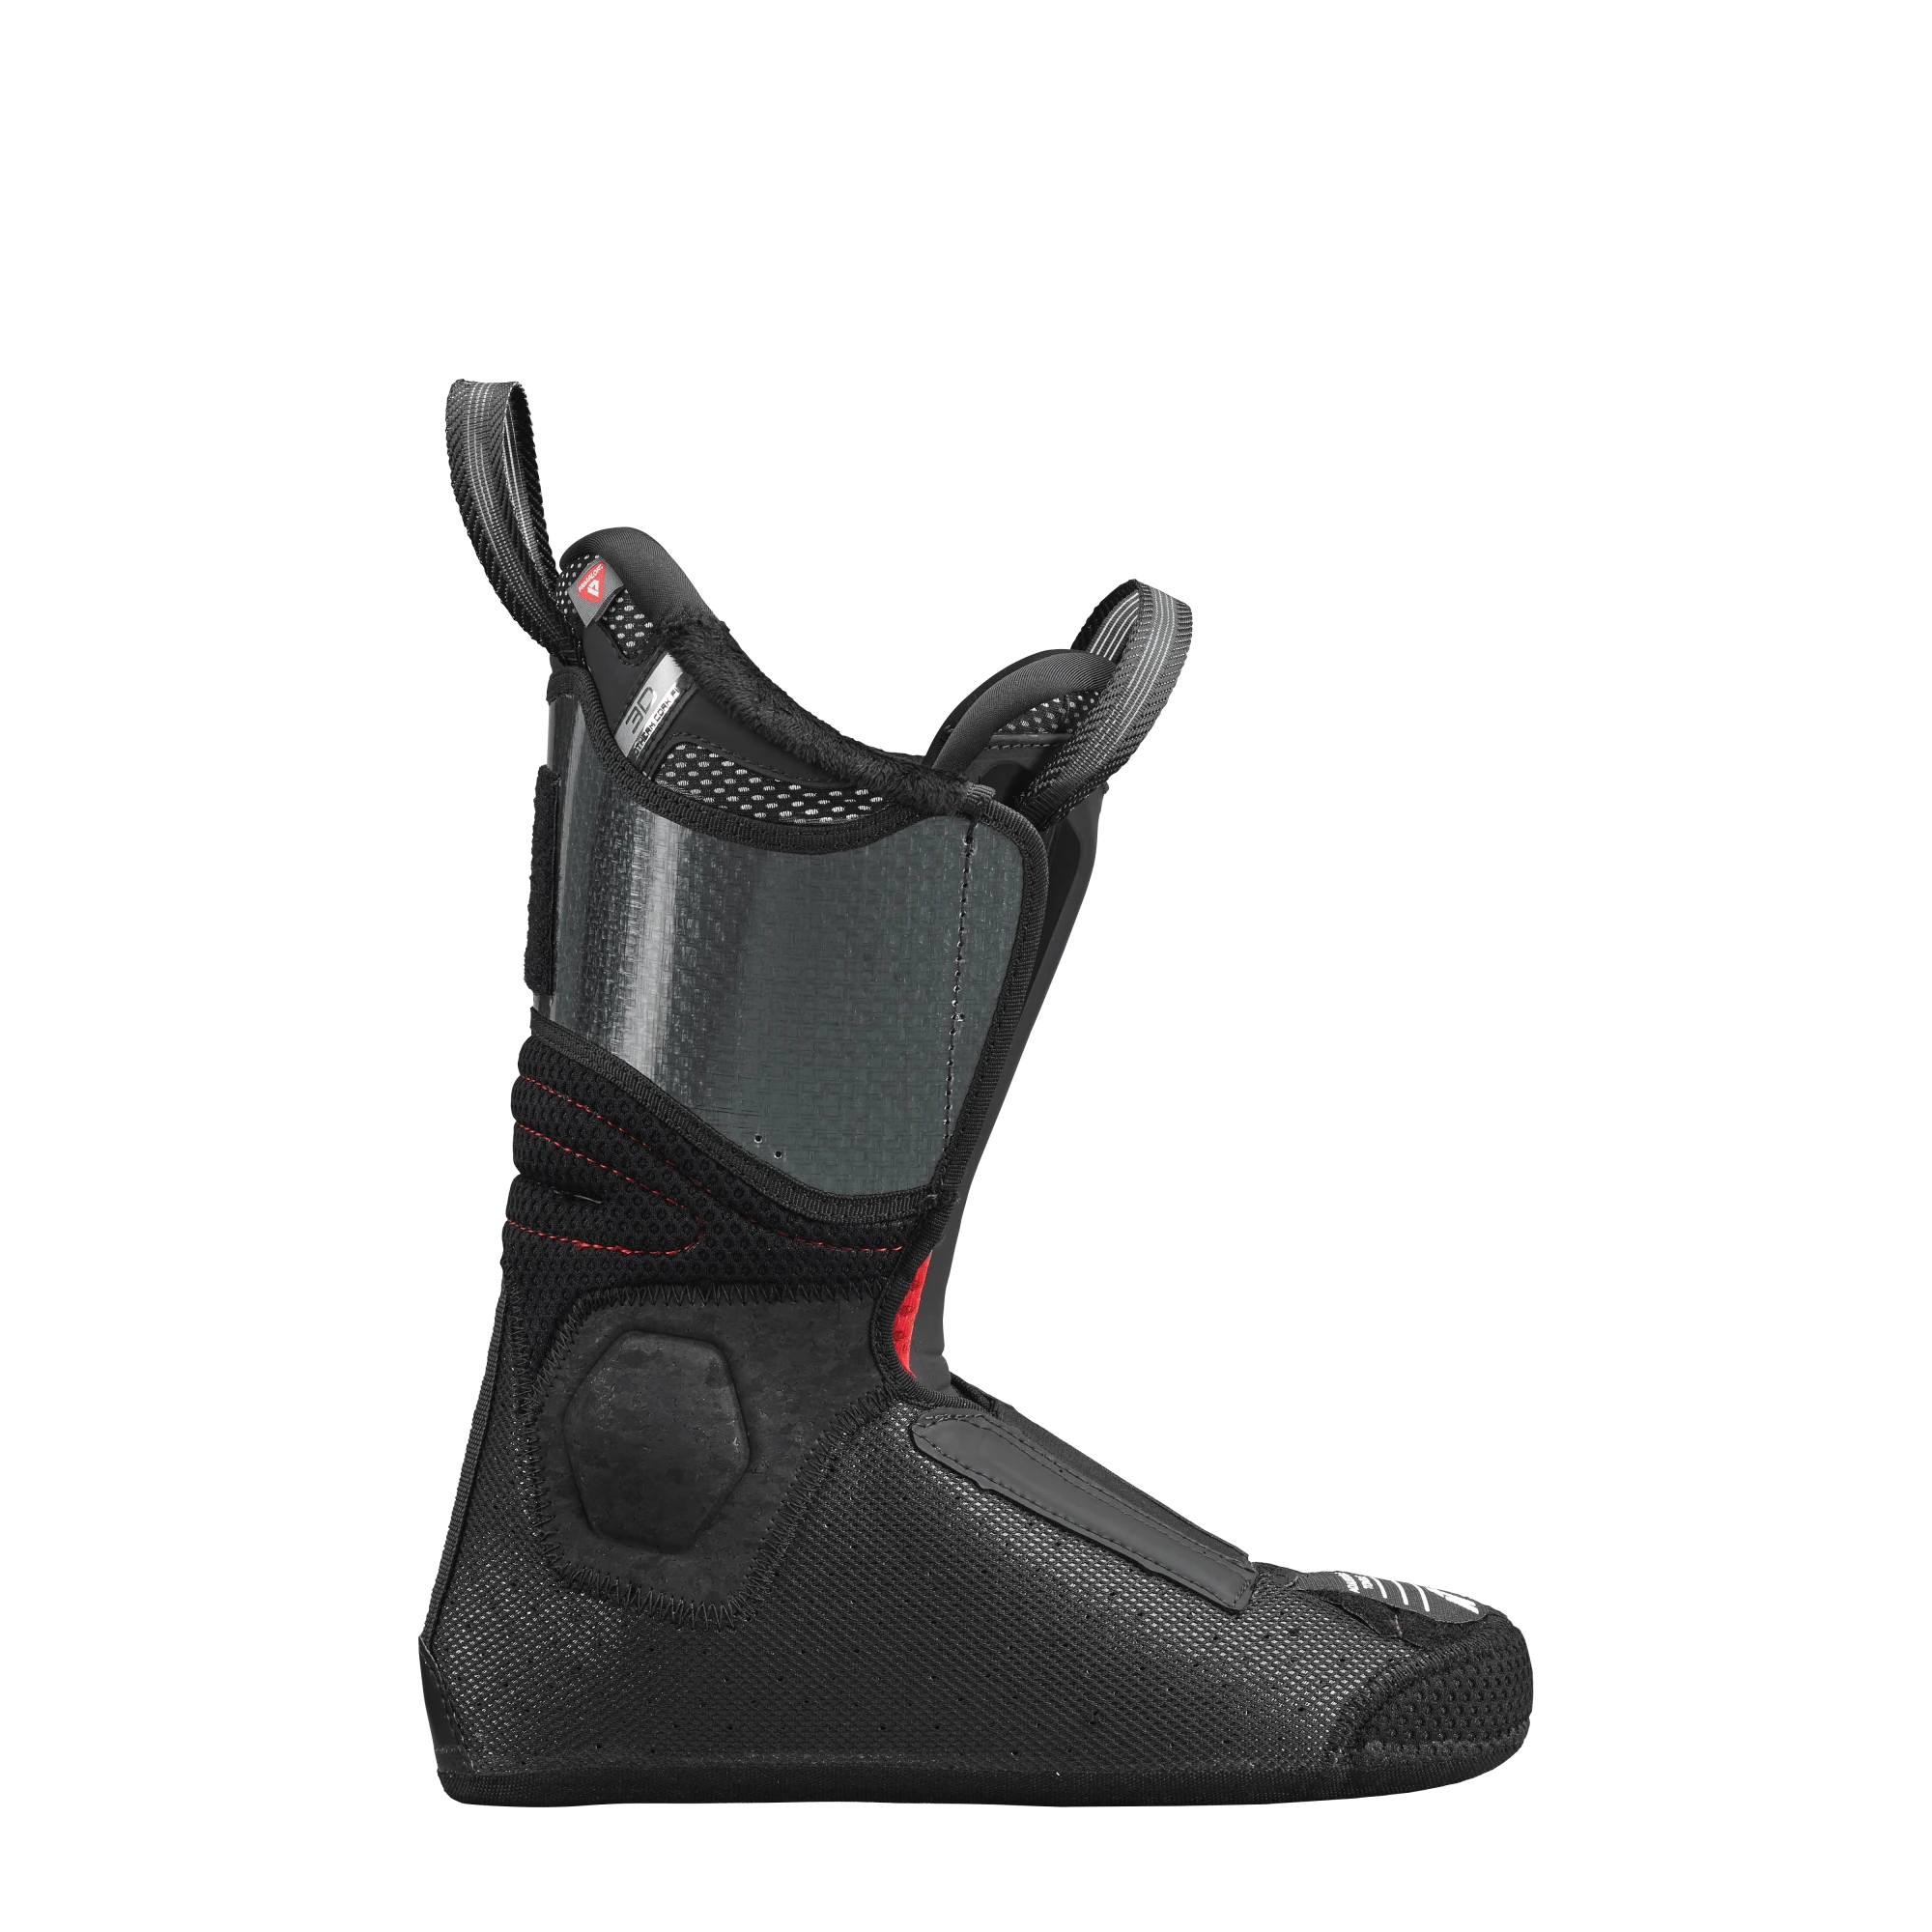 Nordica Unlimited 105 DYN Women's Ski Boots